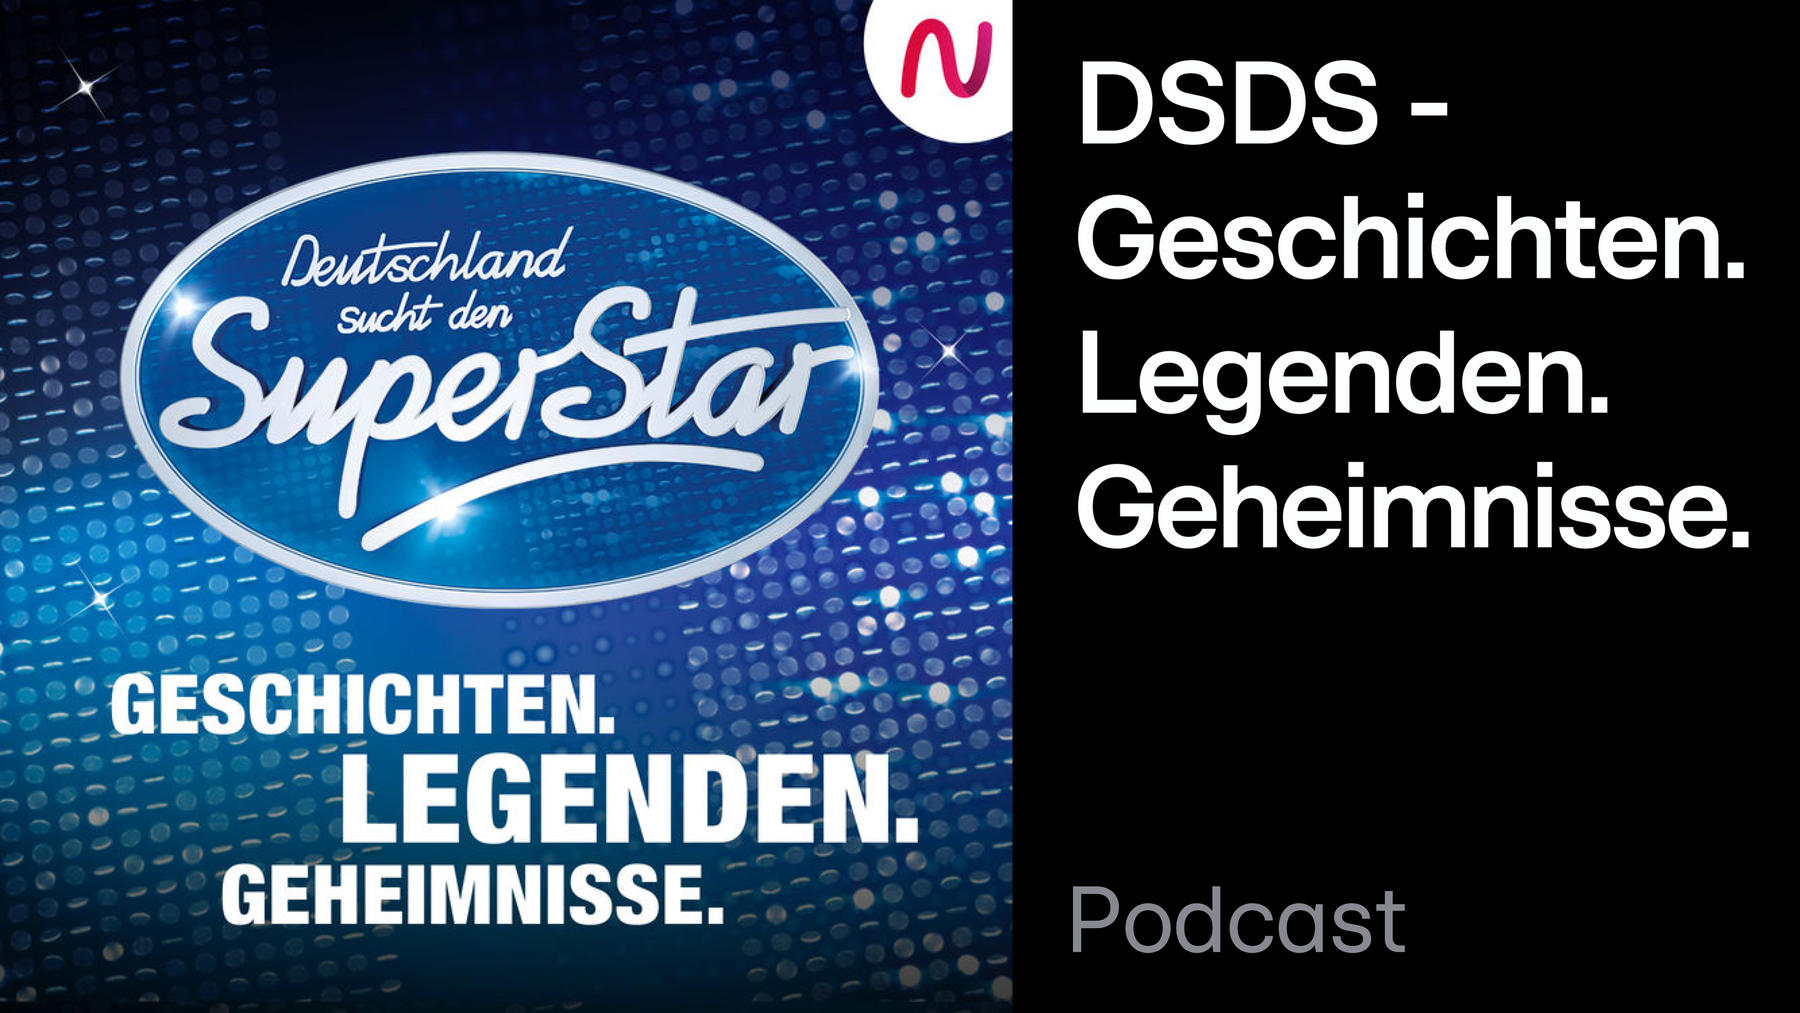 Podcast: DSDS - Geschichten. Legenden. Geheimnisse.